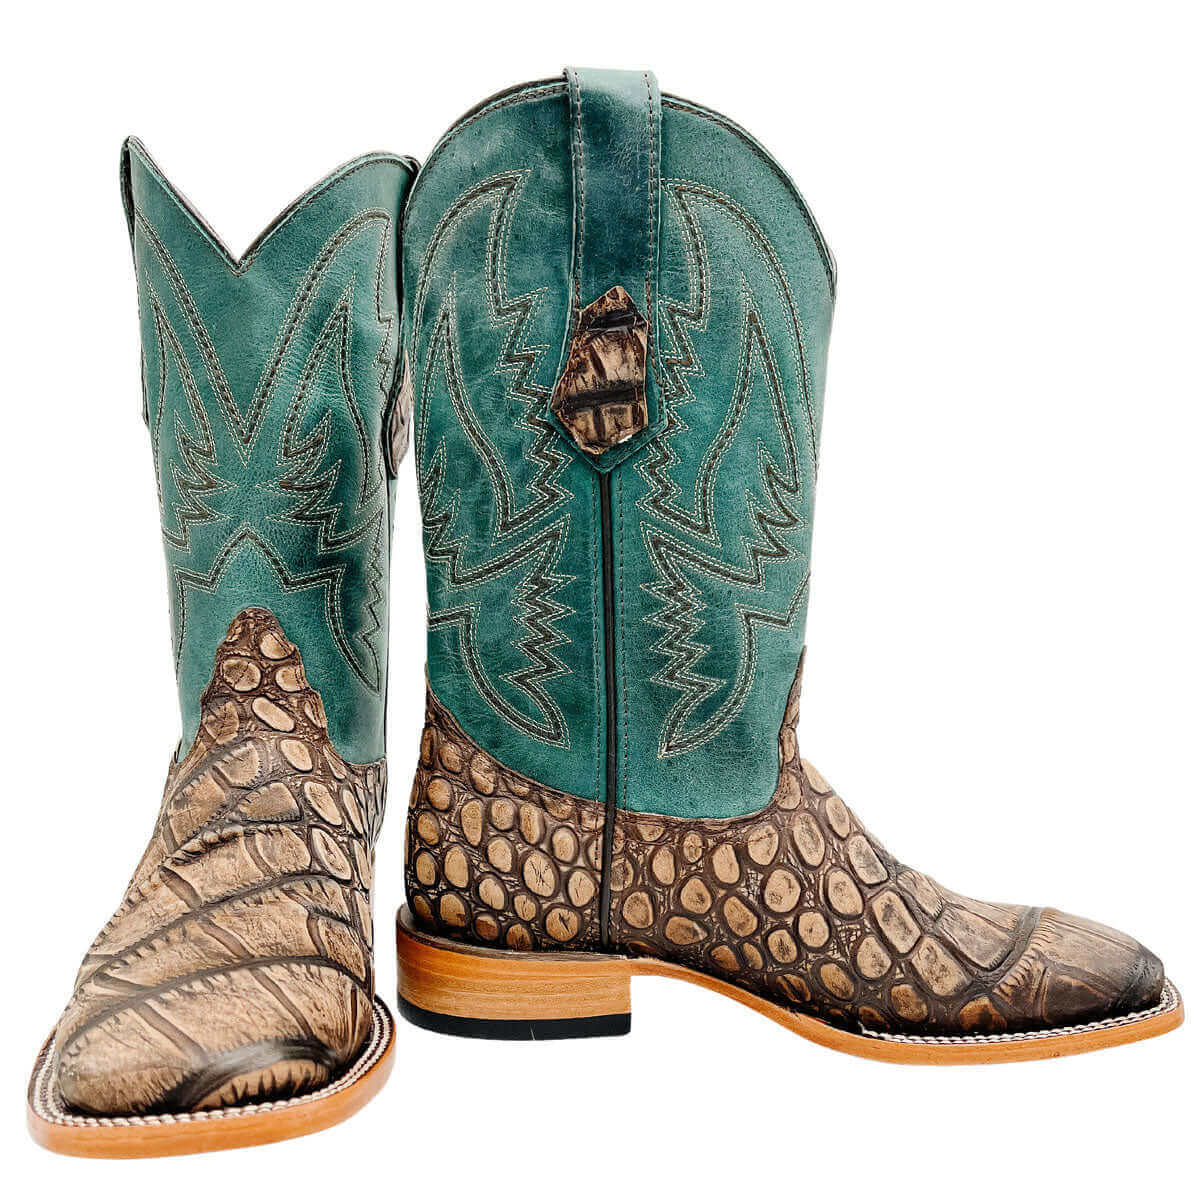 Vaccari Boots  San Antonio TX